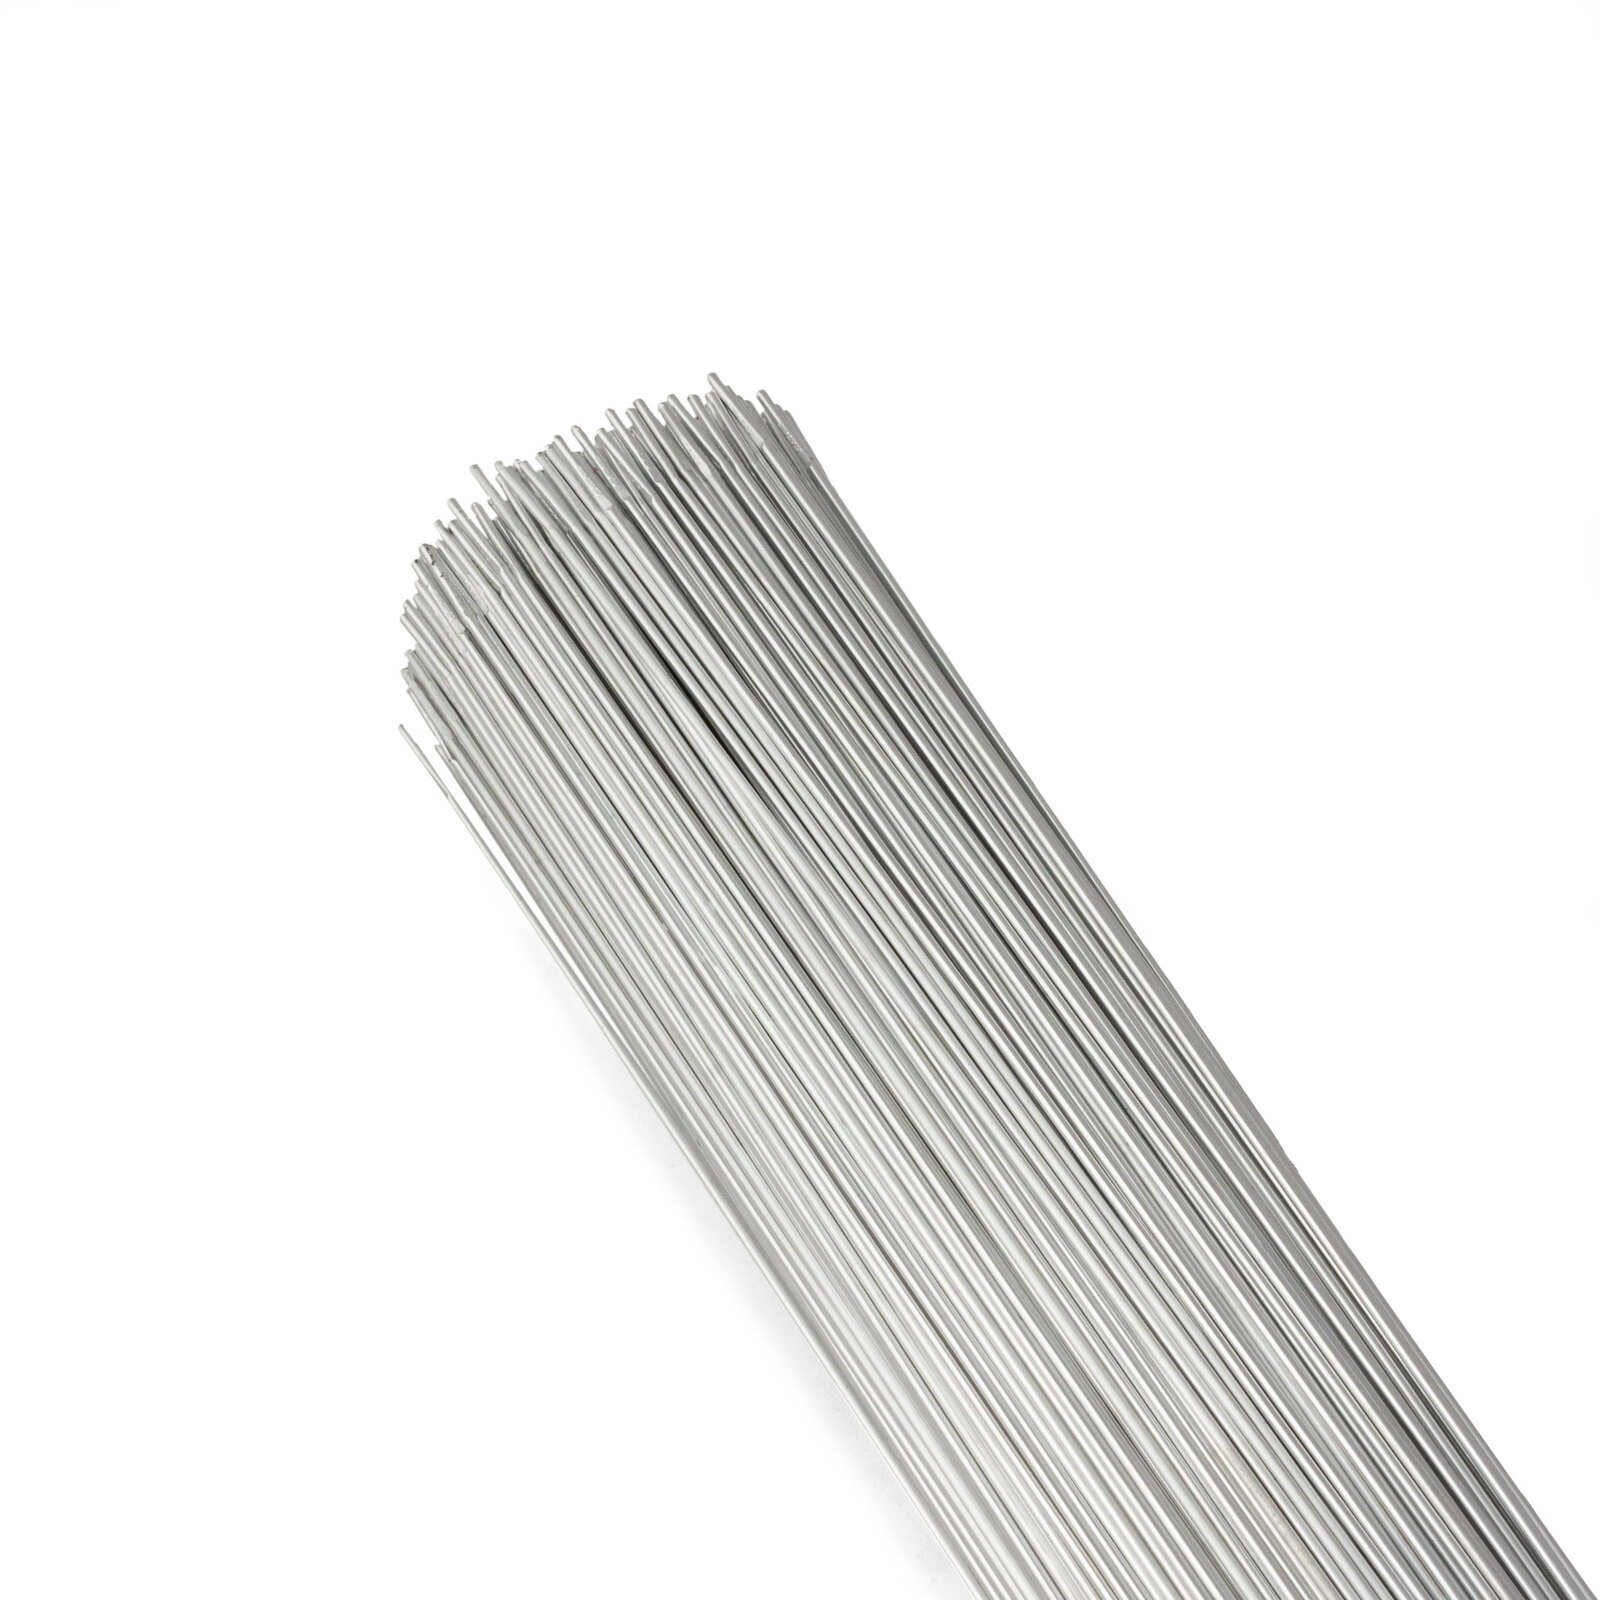 1kg - ER5356 1.6mm Aluminium TIG Filler Wire Rods